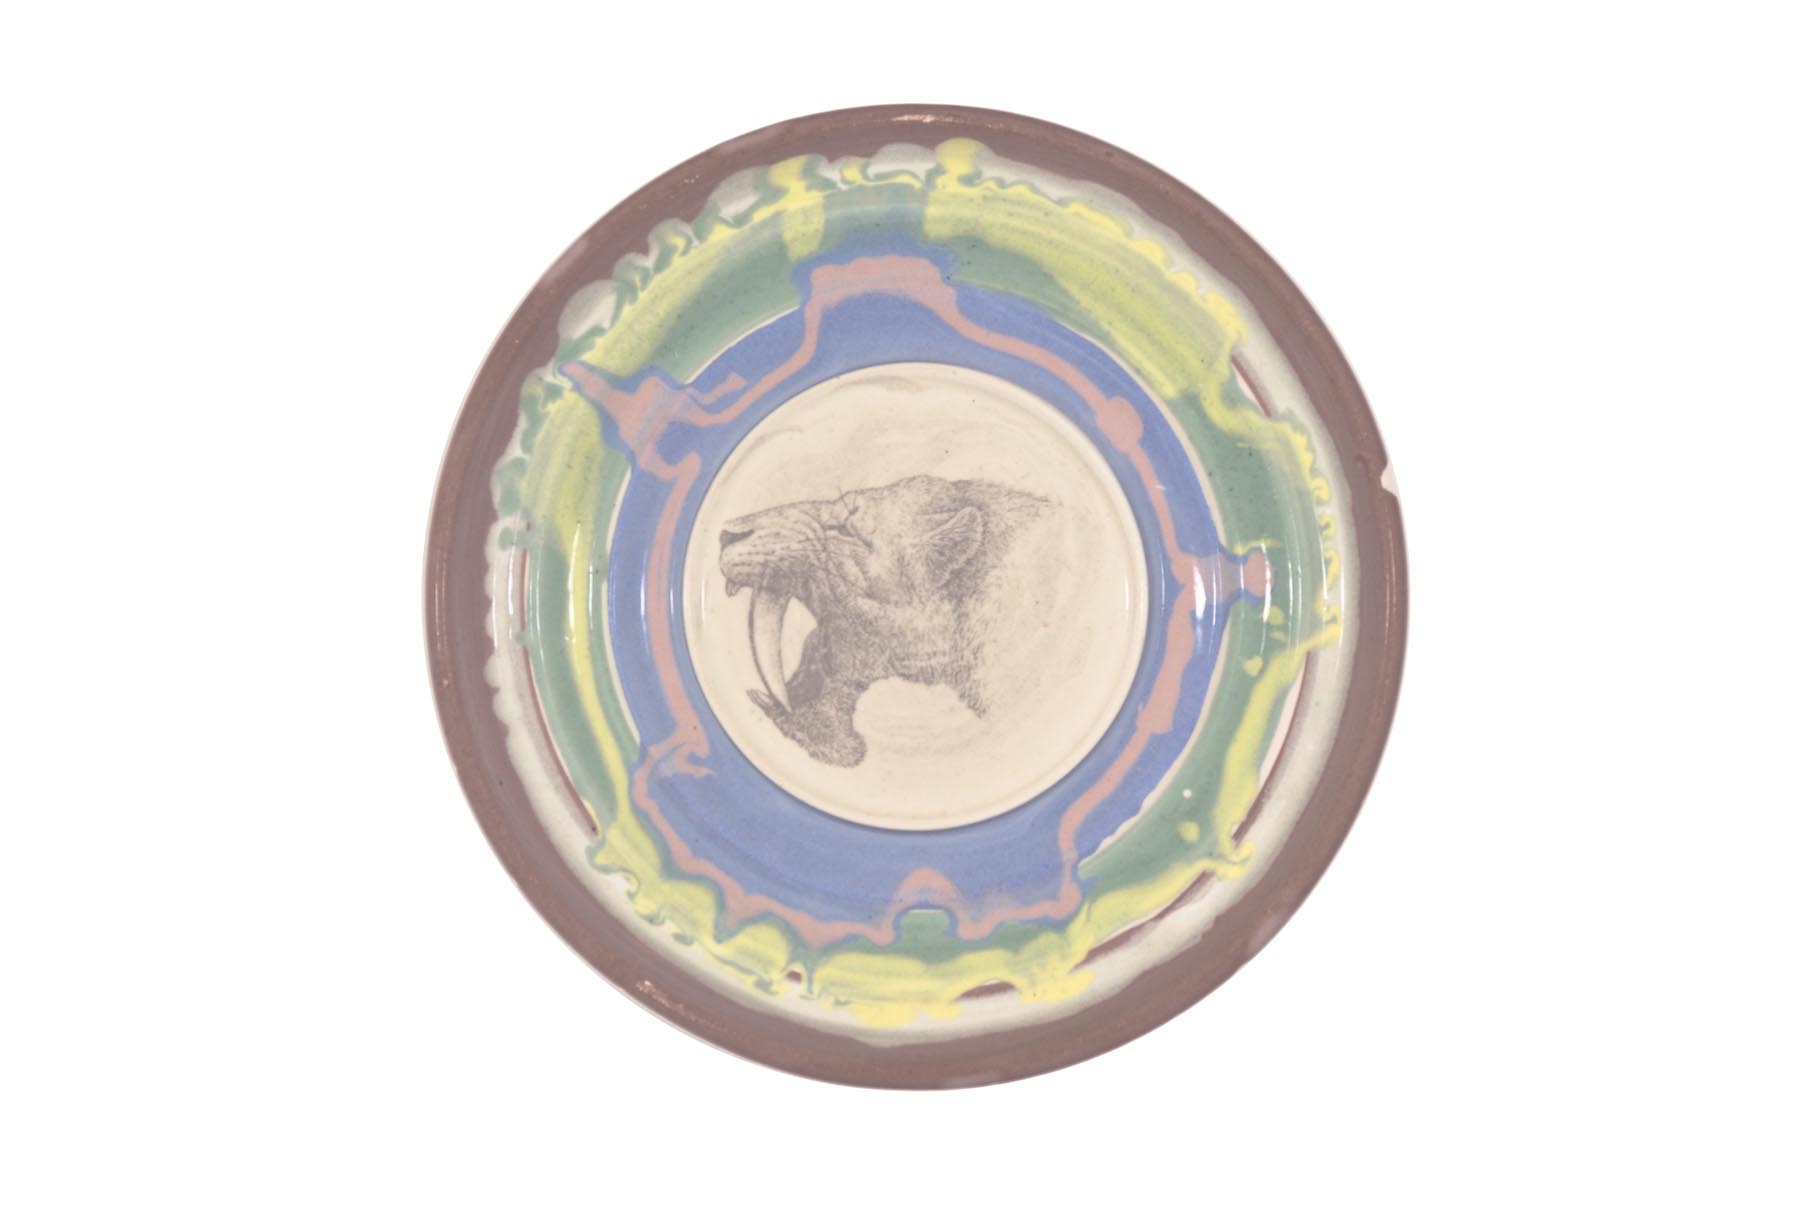      Barbourofelis   2002   slip decorated earthenware with photoceramic transfer   23cm diameter x 2 cm  